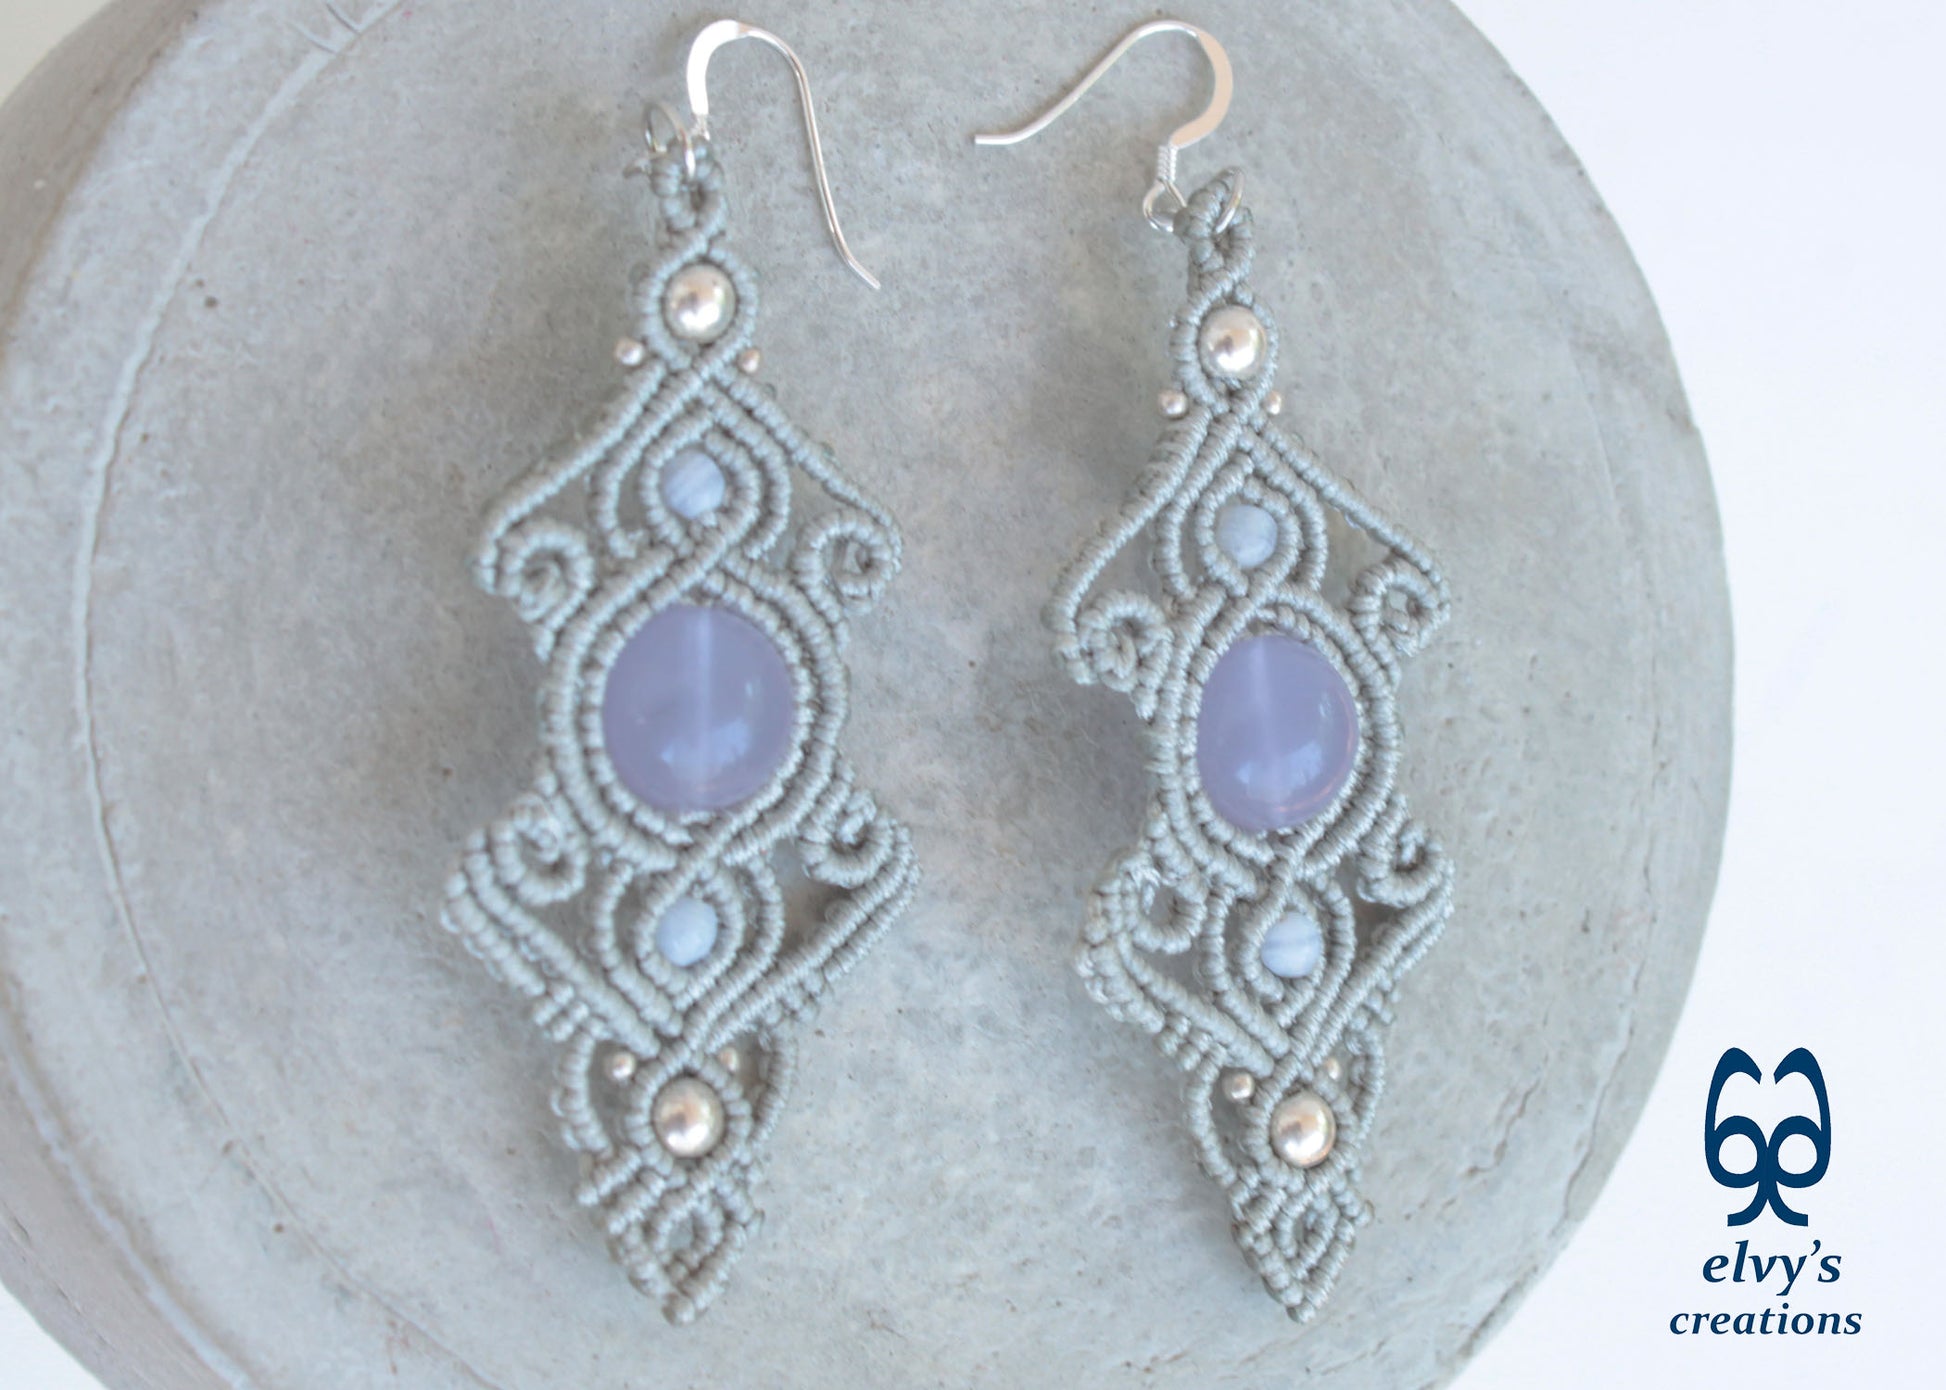 Handmade Macrame Silver Earrings with Chalcedony Gemstones Dangle Earrings